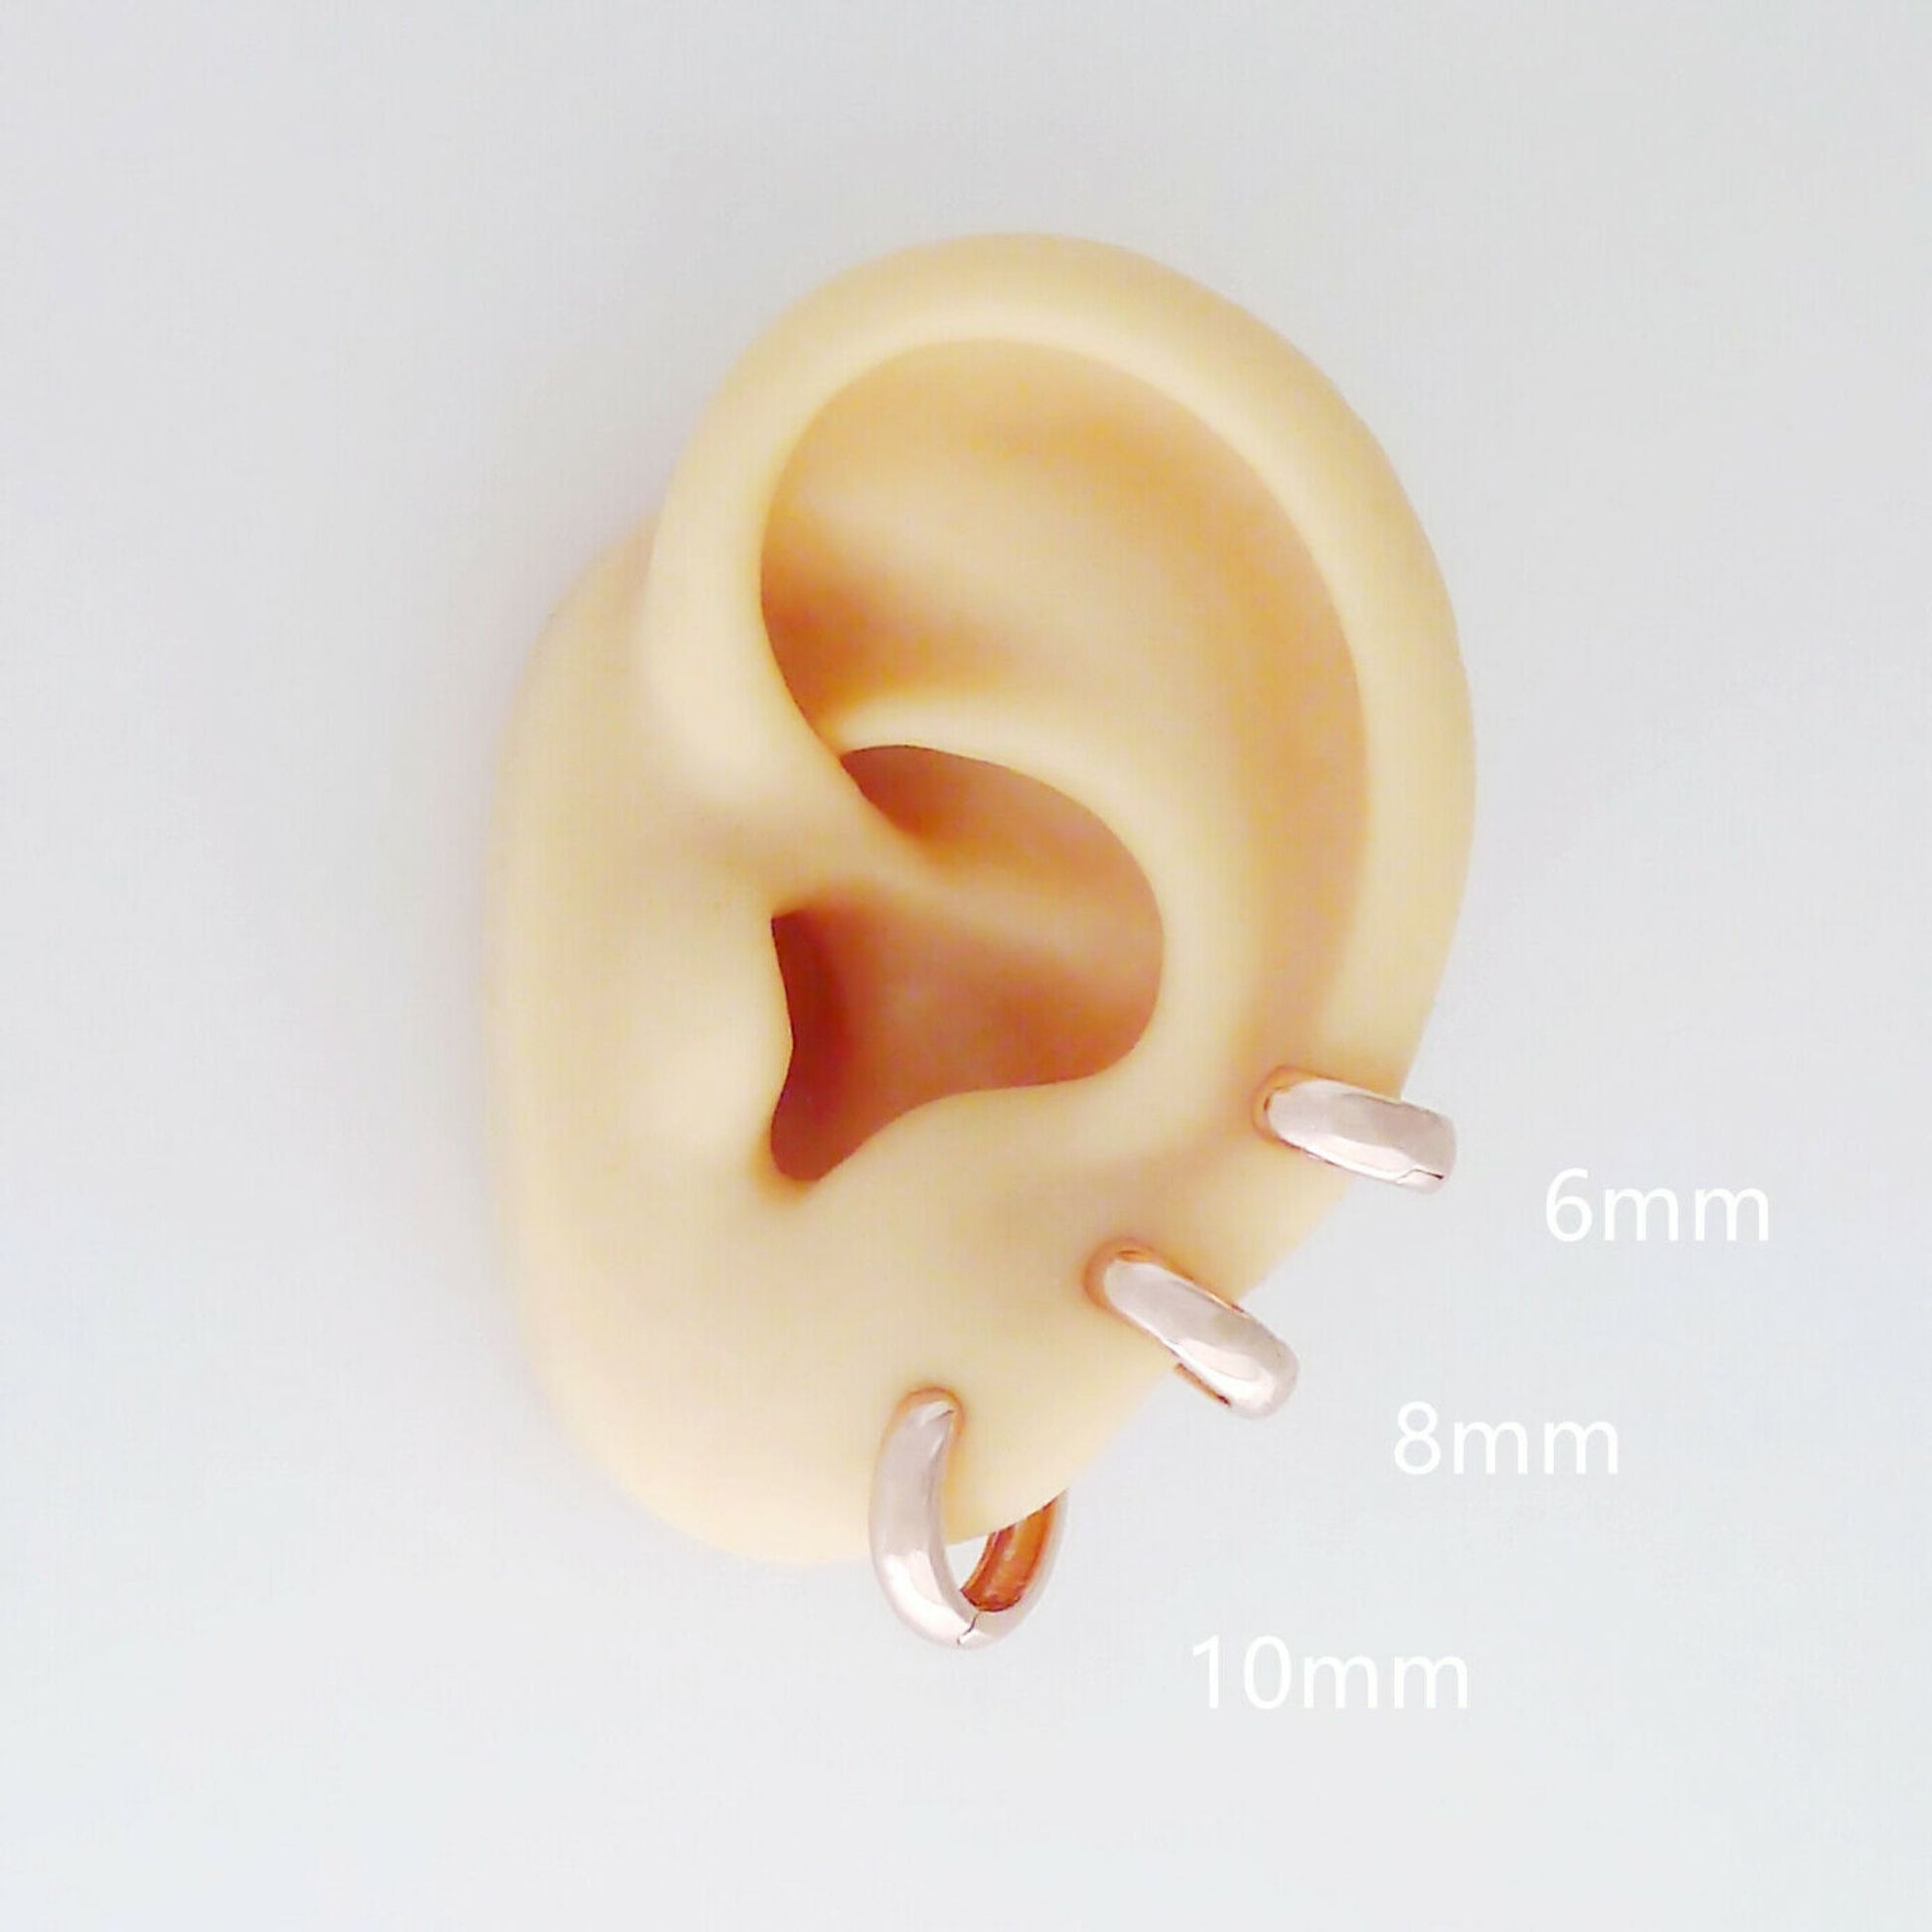 Rose Gold on Sterling Silver Hoop Sleeper Earrings in 6mm, 8mm, and 10mm - sugarkittenlondon